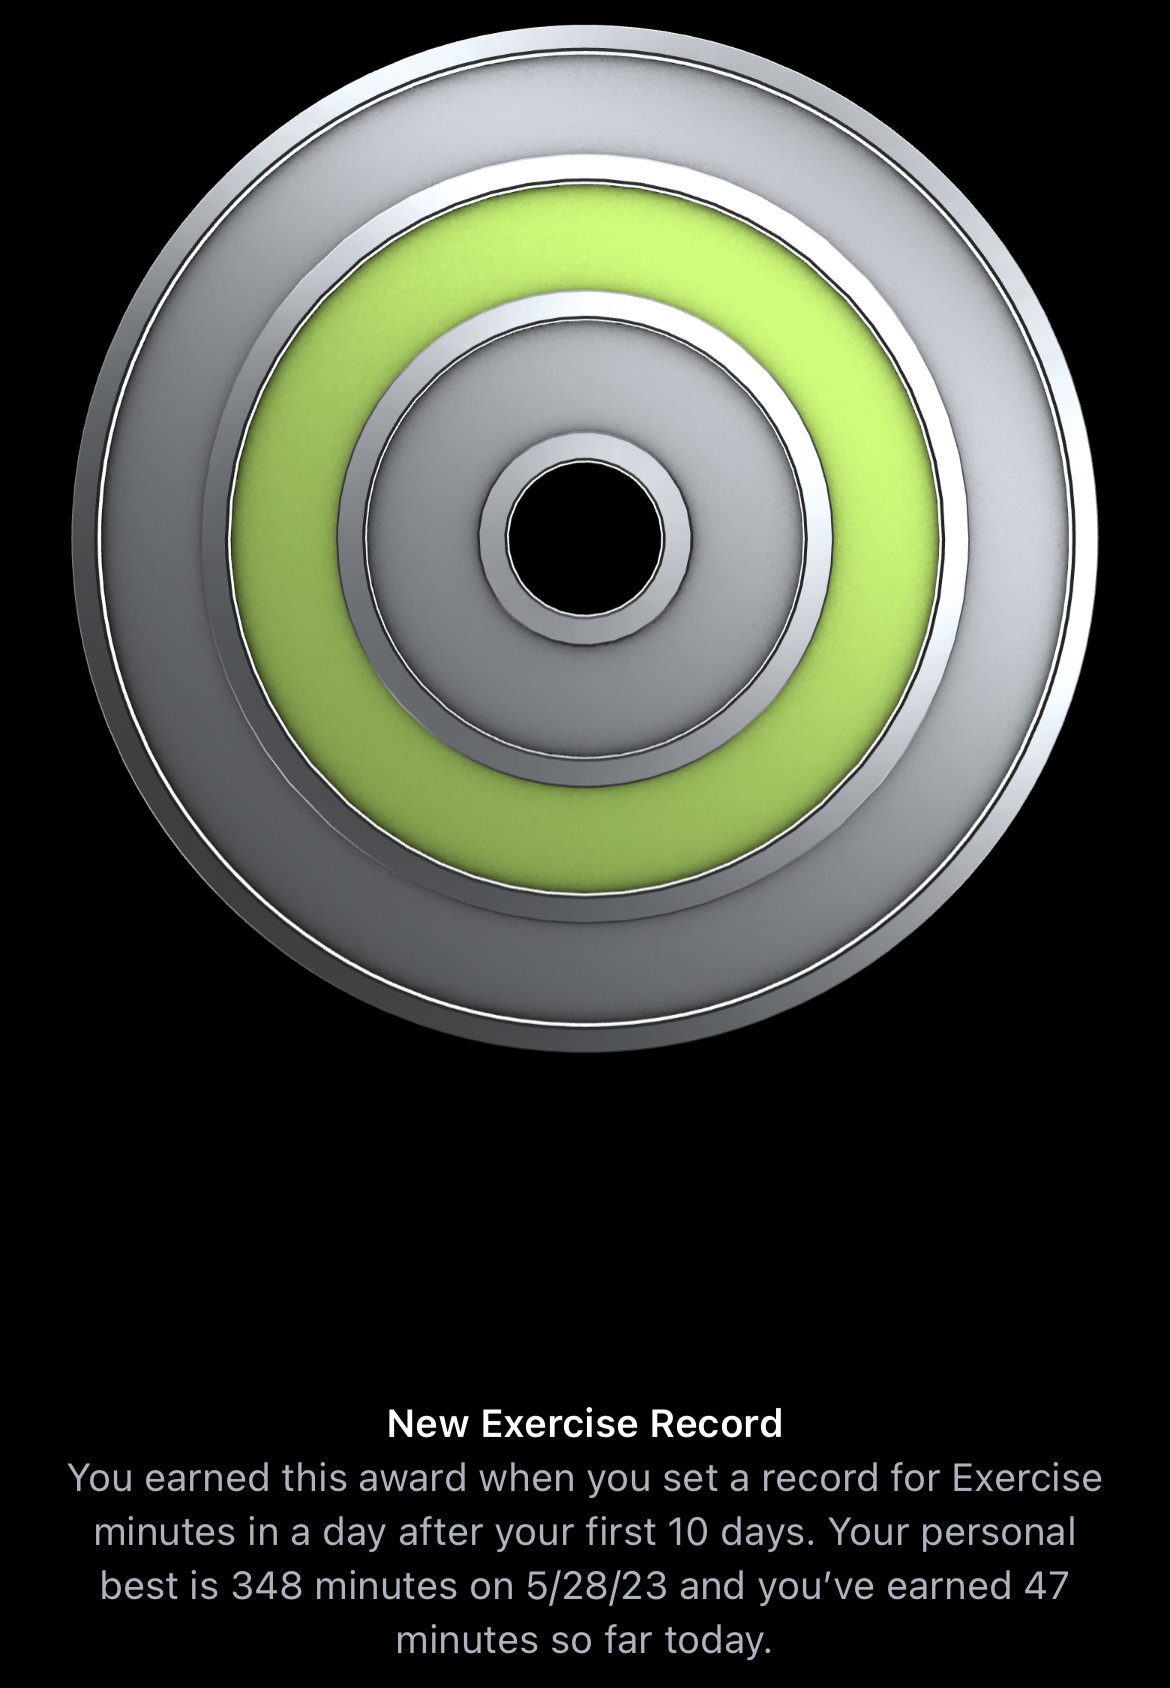 Apple Watch exercise goal maximum badge